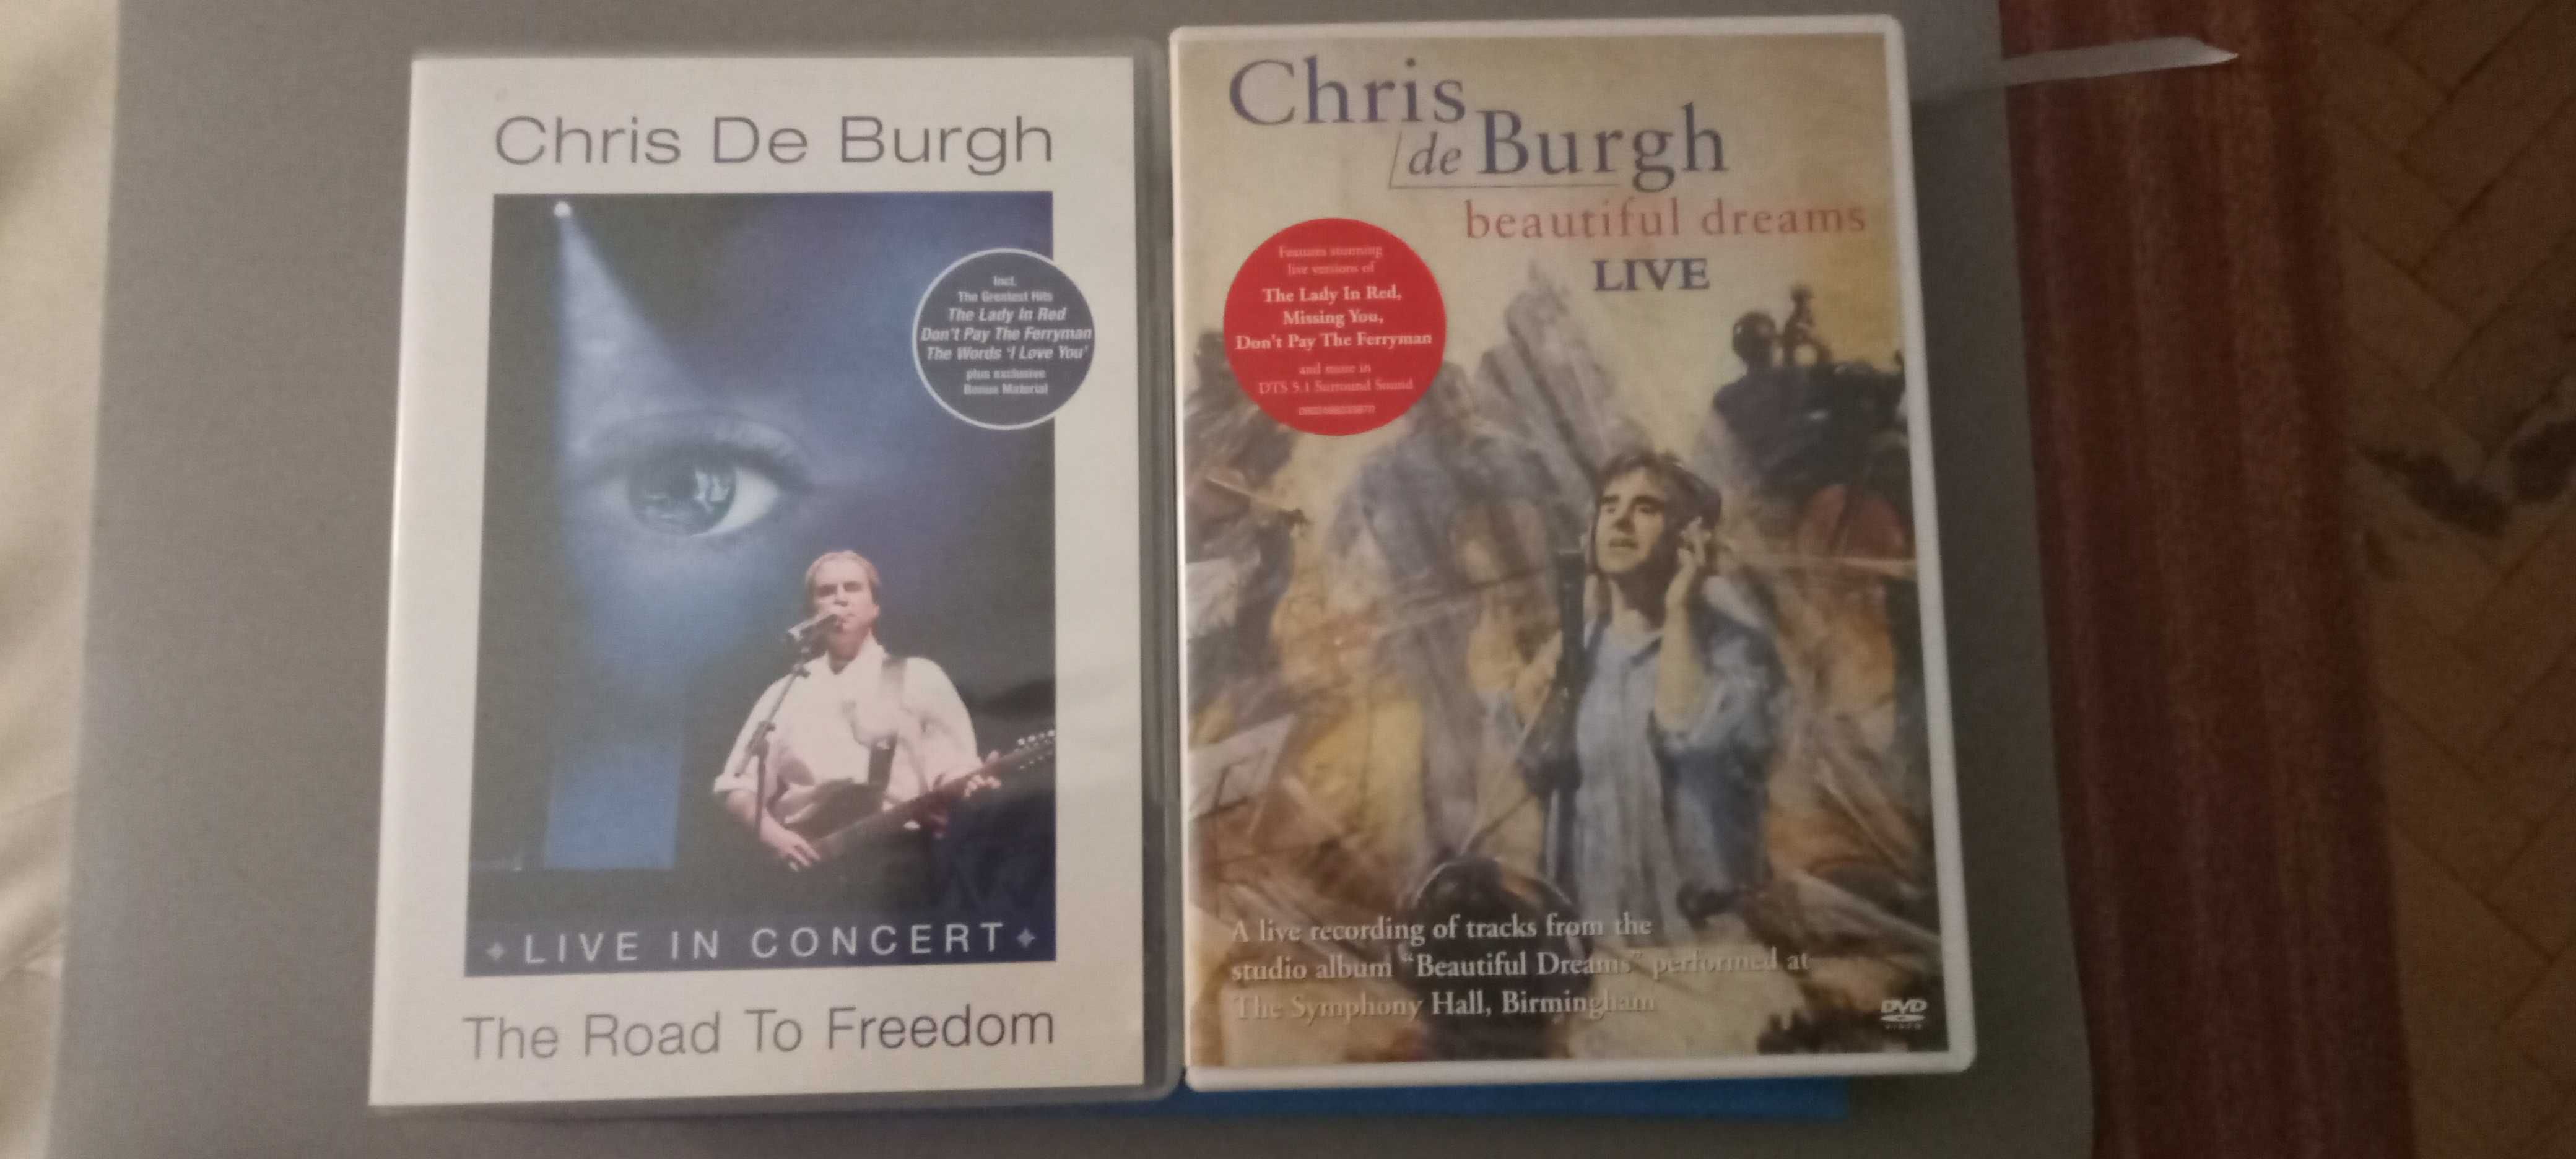 Chris de Burgh, zestaw DVD beautiful dream & The road to freedom live